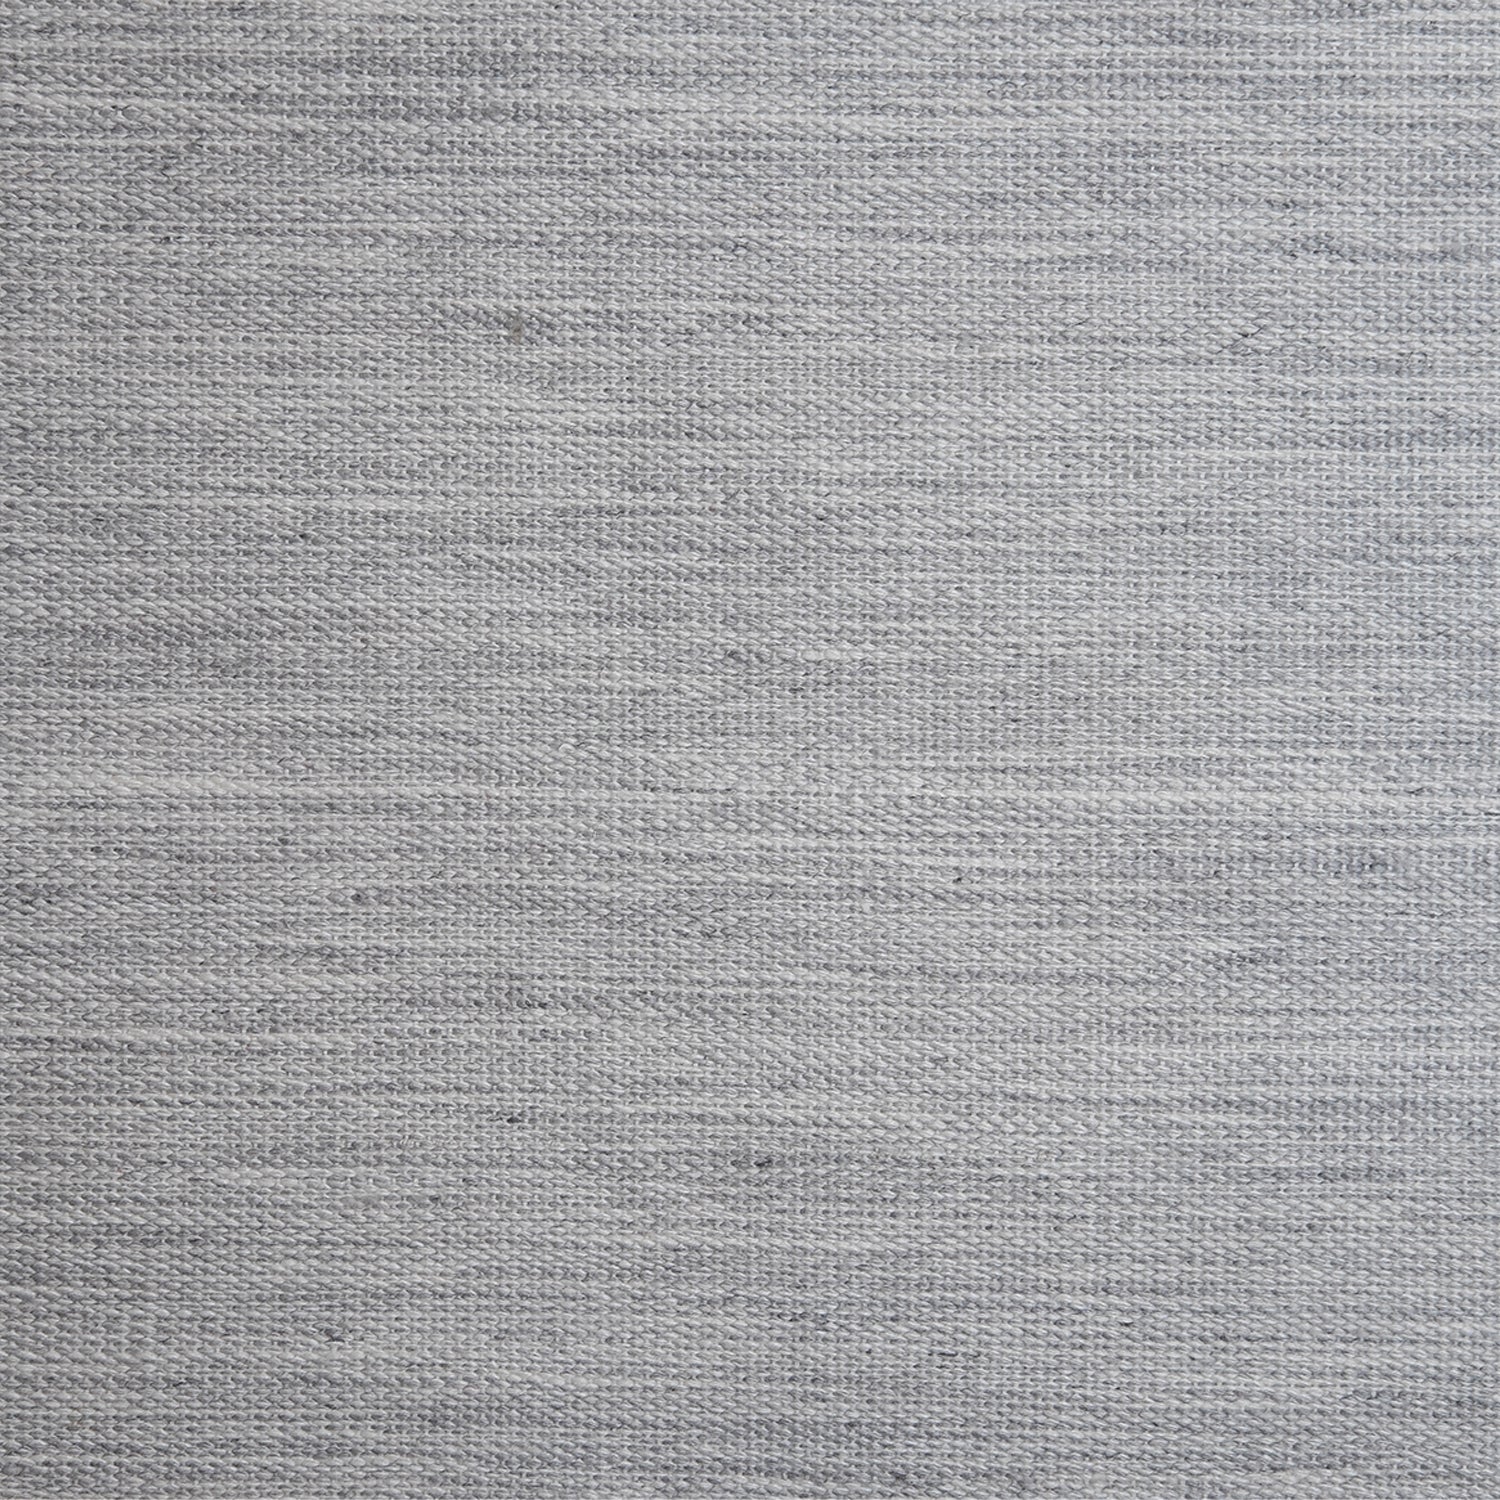 Outdoor broadloom carpet swatch in a flat weave in dove gray.